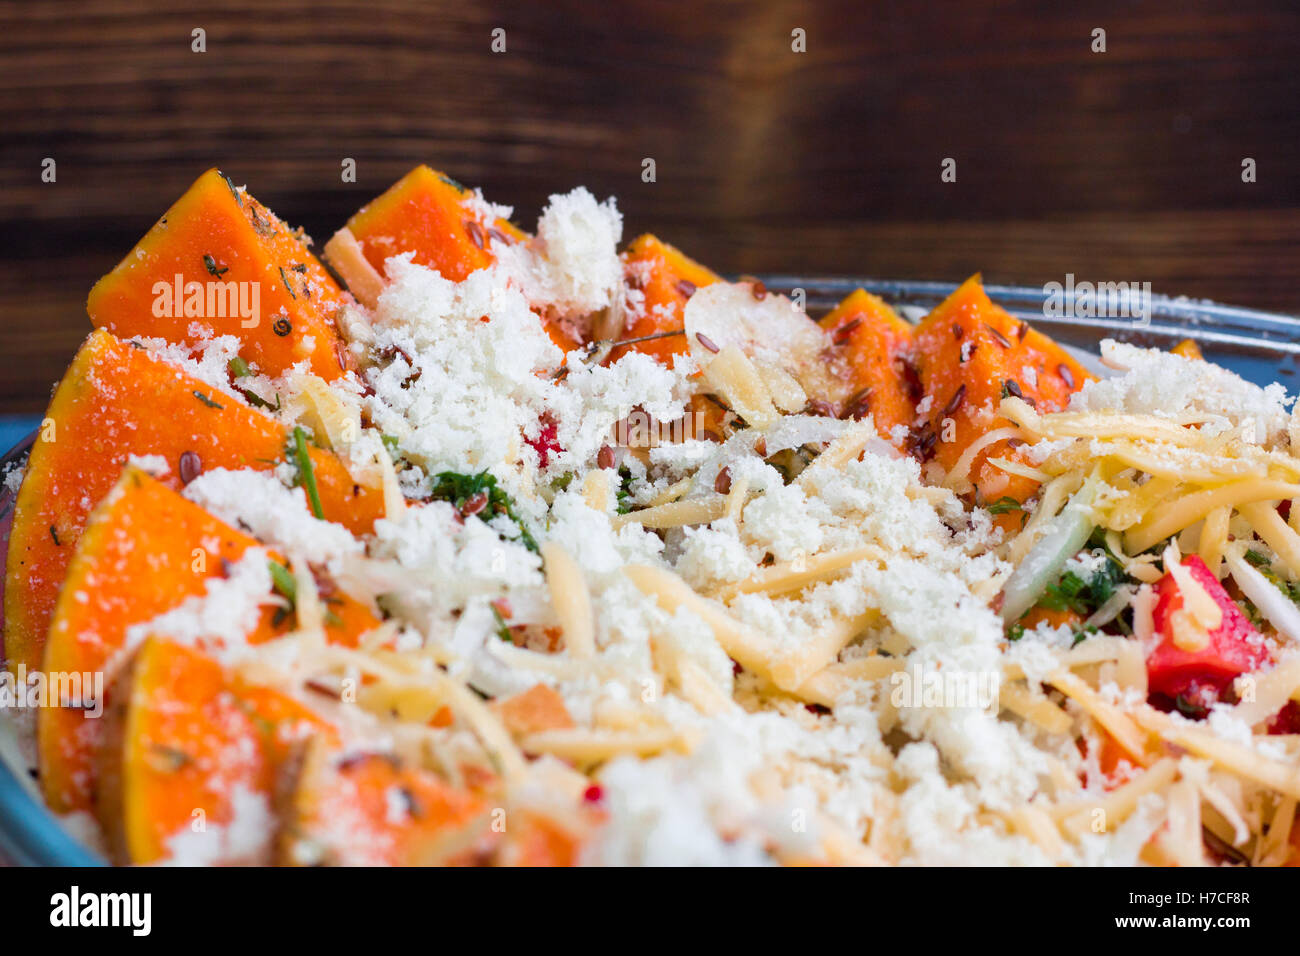 Vegetarian salad of orange pumkin, mixed vegetables, herbs and cheese Stock Photo